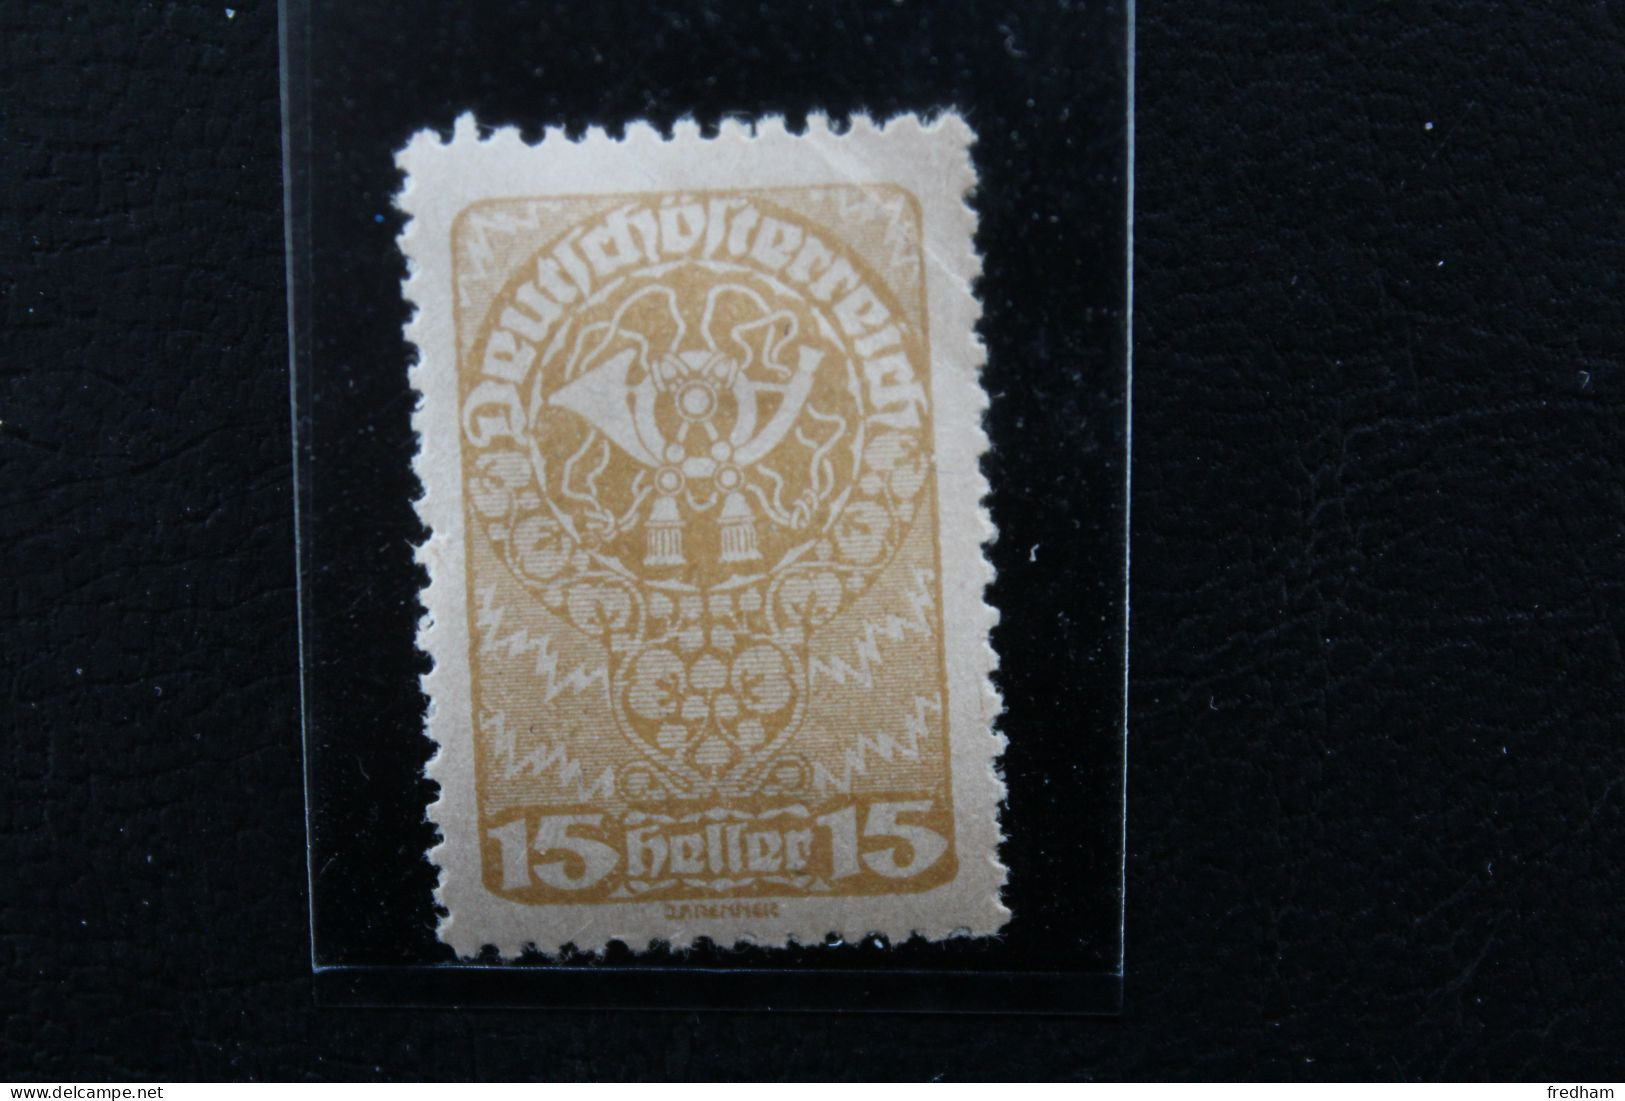 1920 Mi AT 262y PAPIER EPAIS GRIS 15 HELLER NEUF MH - Unused Stamps